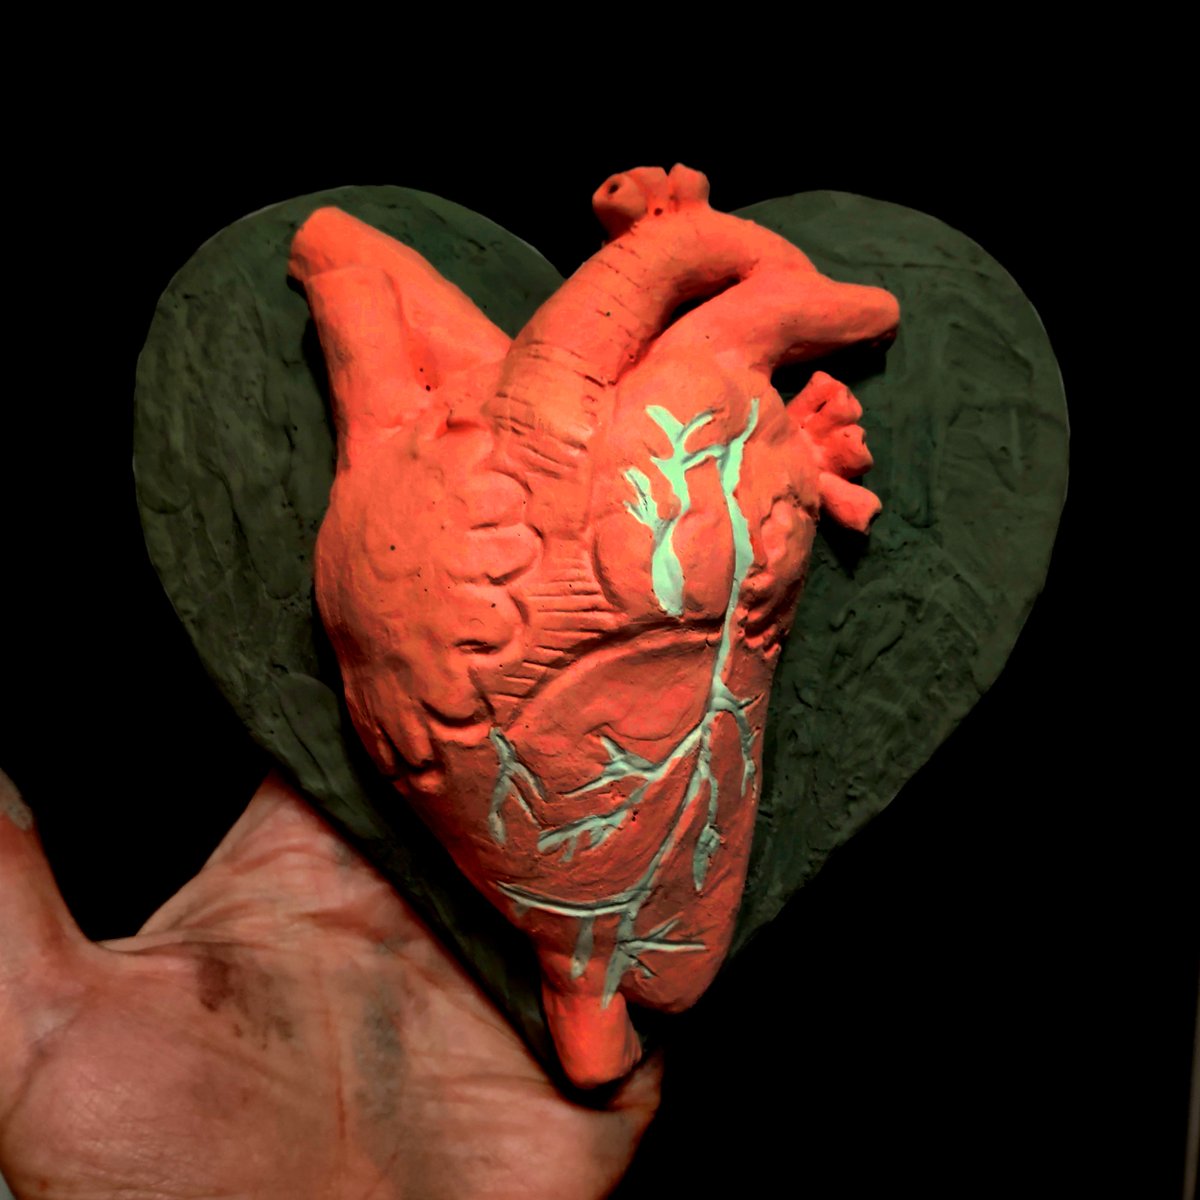 Heart of Hearts, before glaze firing
#heart #anatomicalheart #ceramicartist #potteryart #clayartist #tucsonartist #neurodivergentartist #aberrantceramics #artistsontwitter